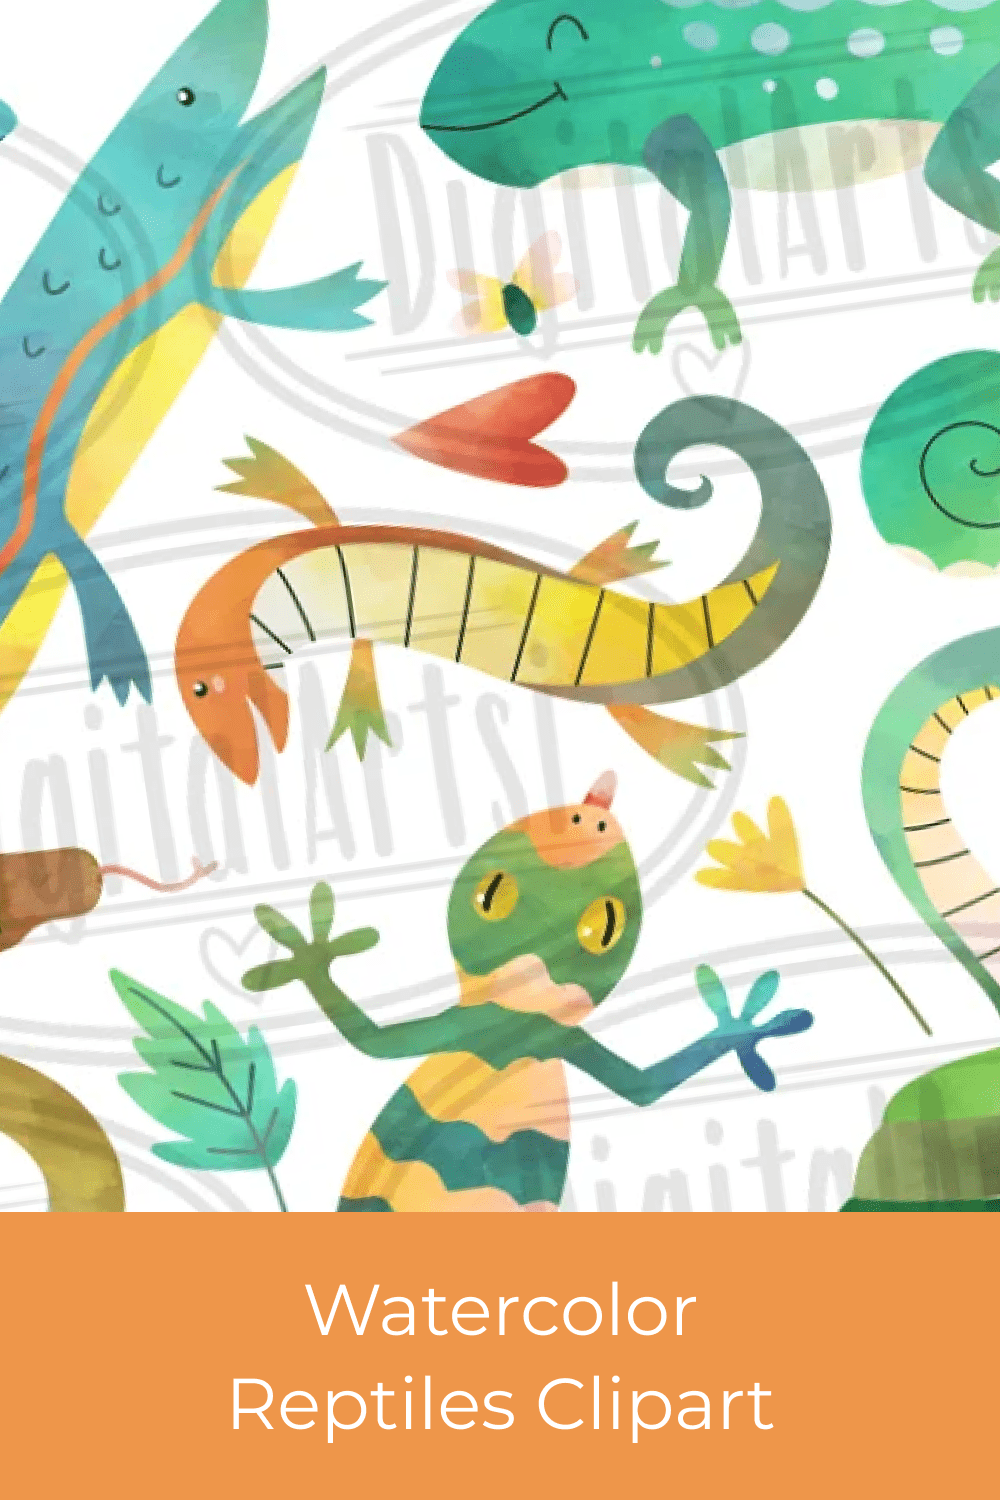 06 watercolor reptiles clipart 1000x1500 1